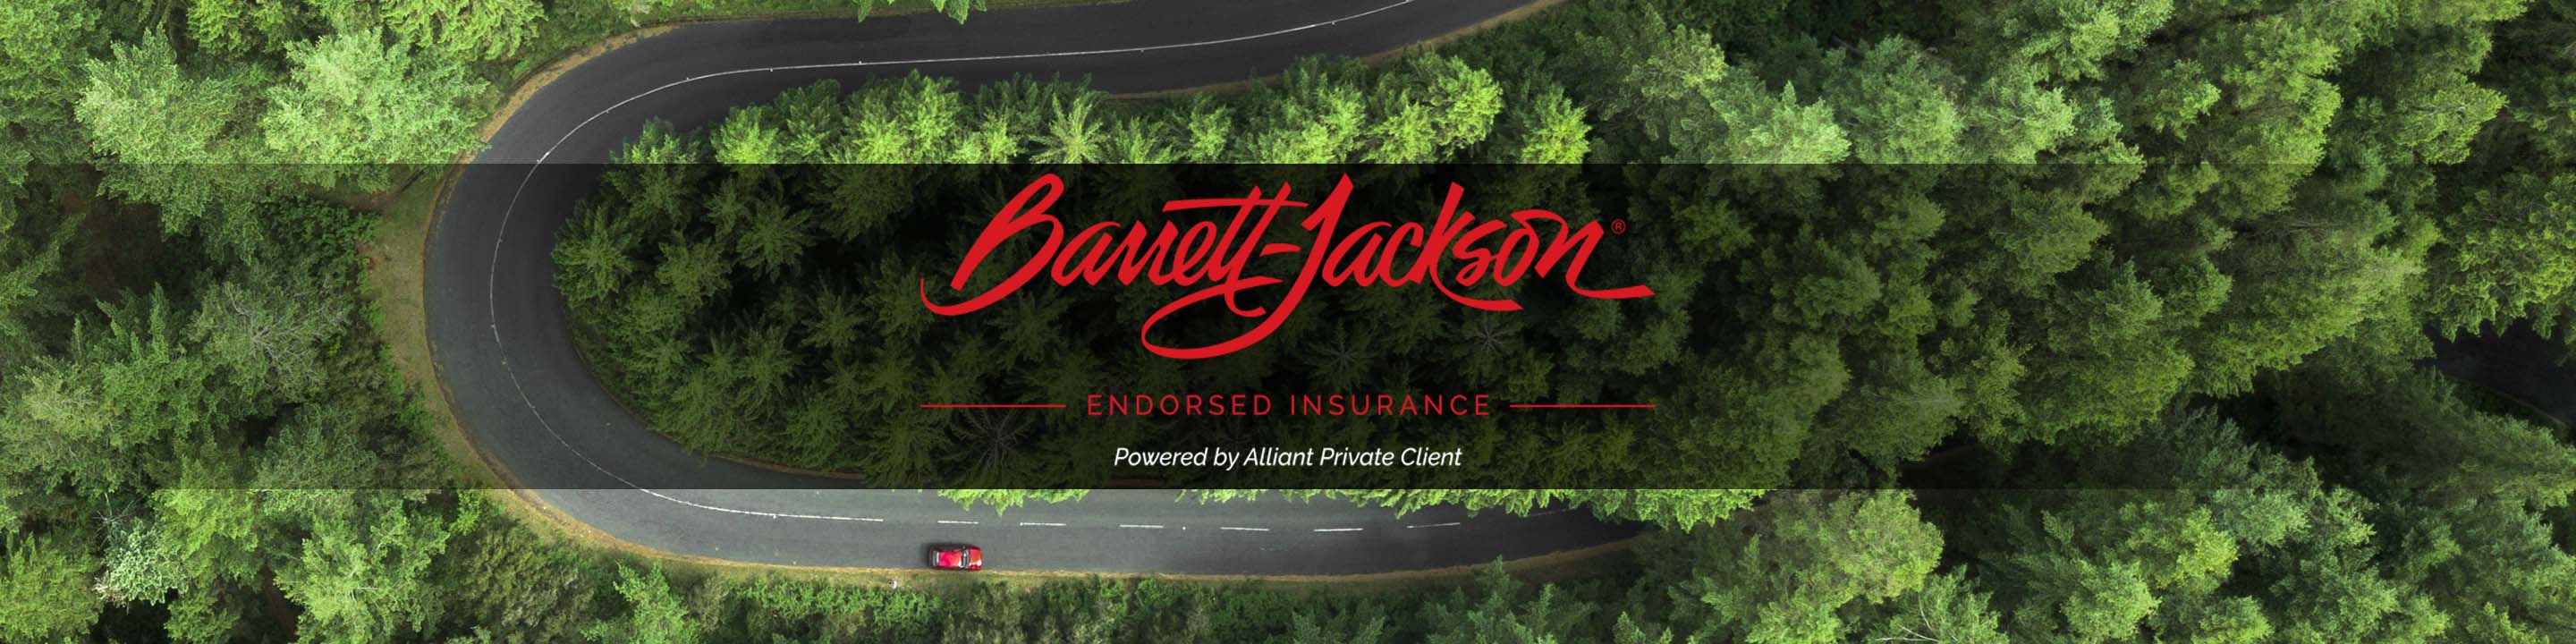 Barrett Jackson Road Tested Protection